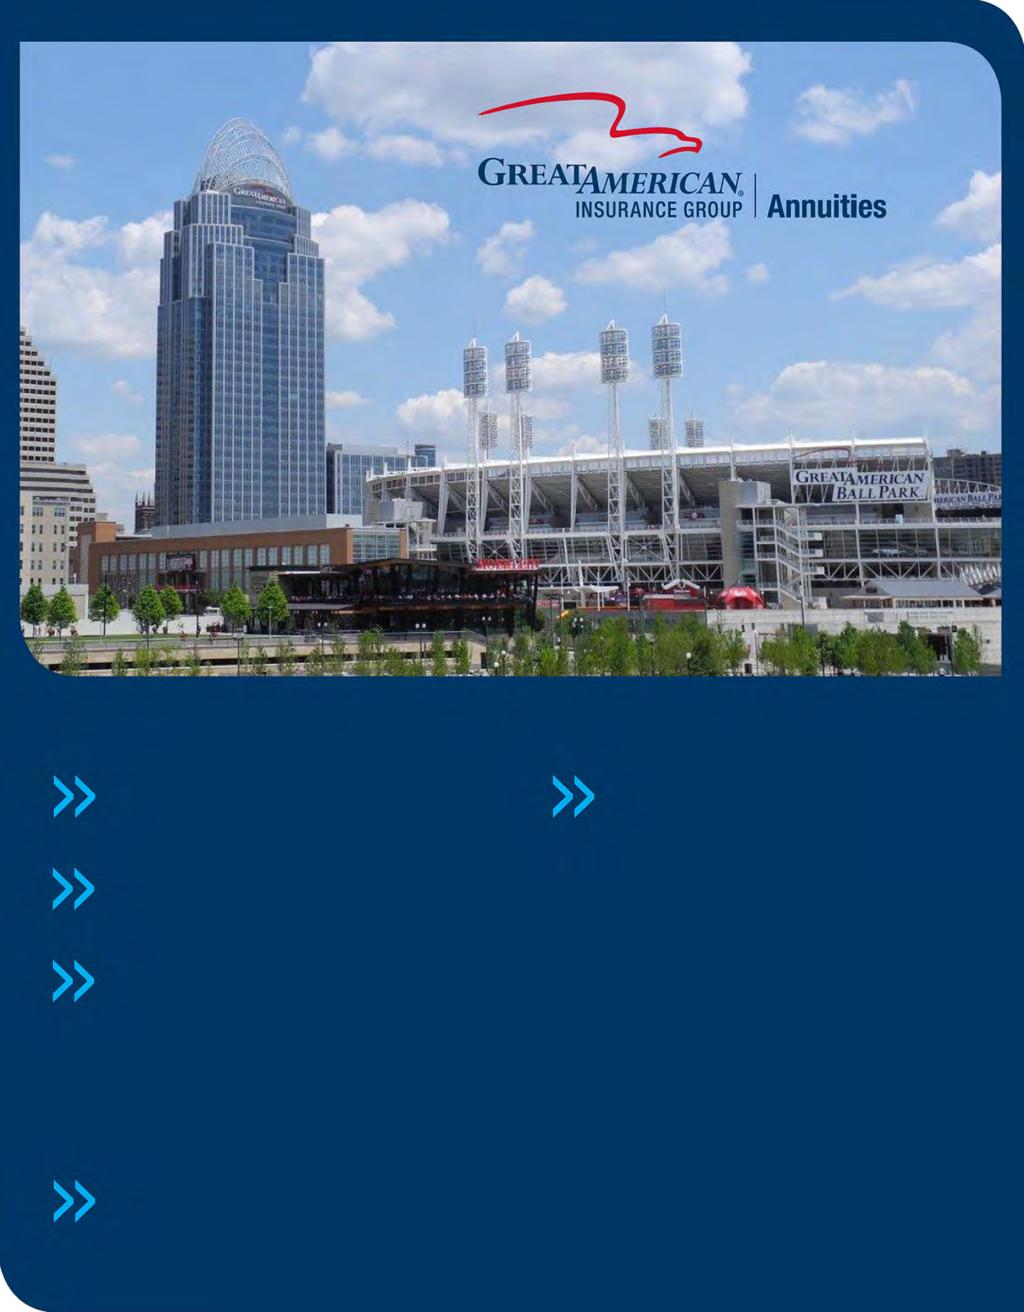 Great American Insurance Group Tower overlooks Great American Ball Park, home of Cincinnati baseball.